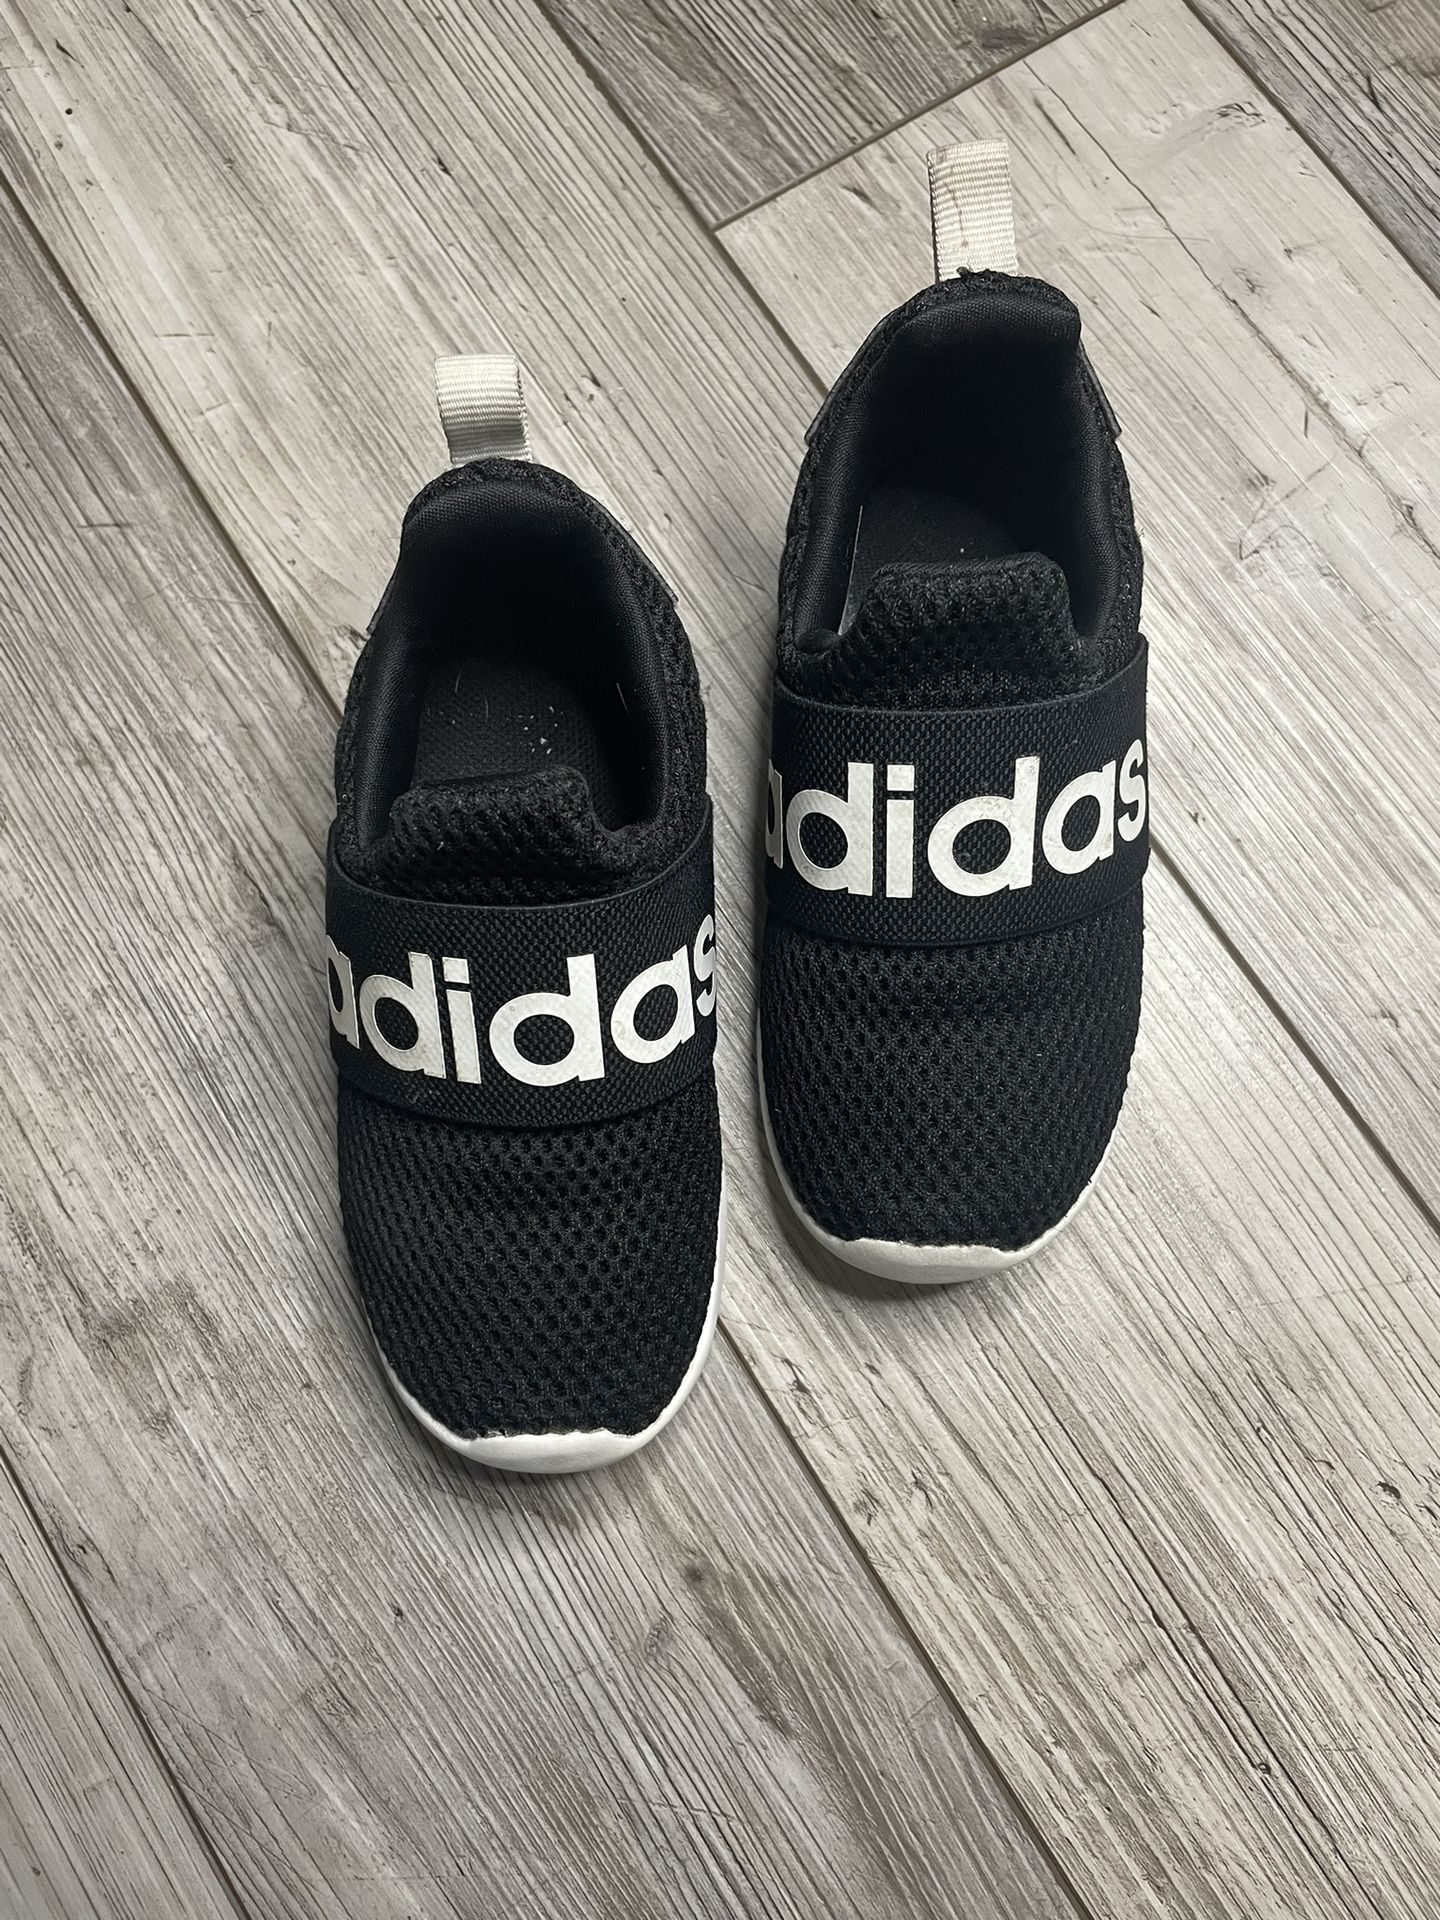 Adidas Kids Shoes Size 8